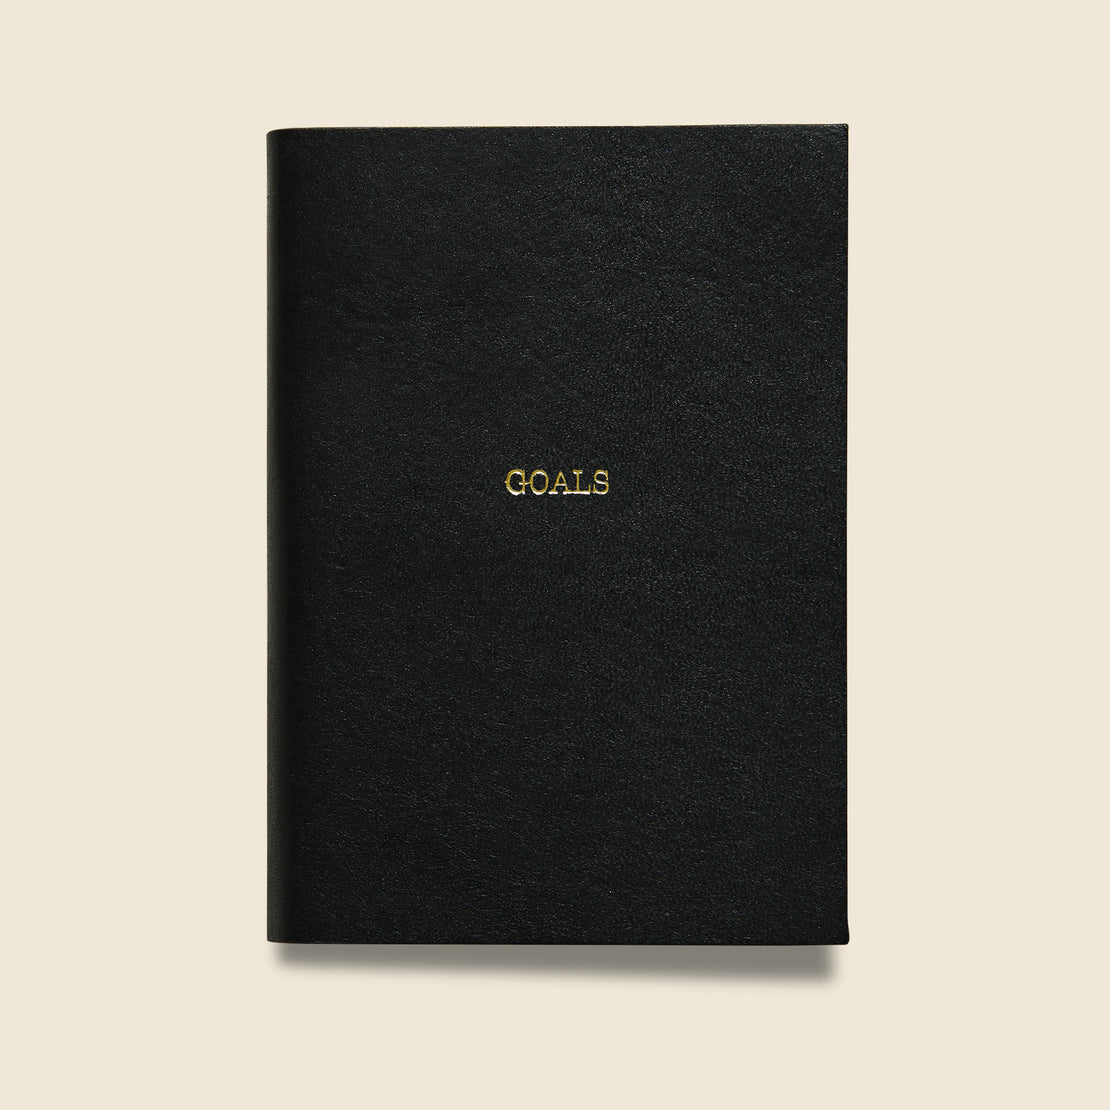 Paper Goods "GOALS" Leather Journal - Black